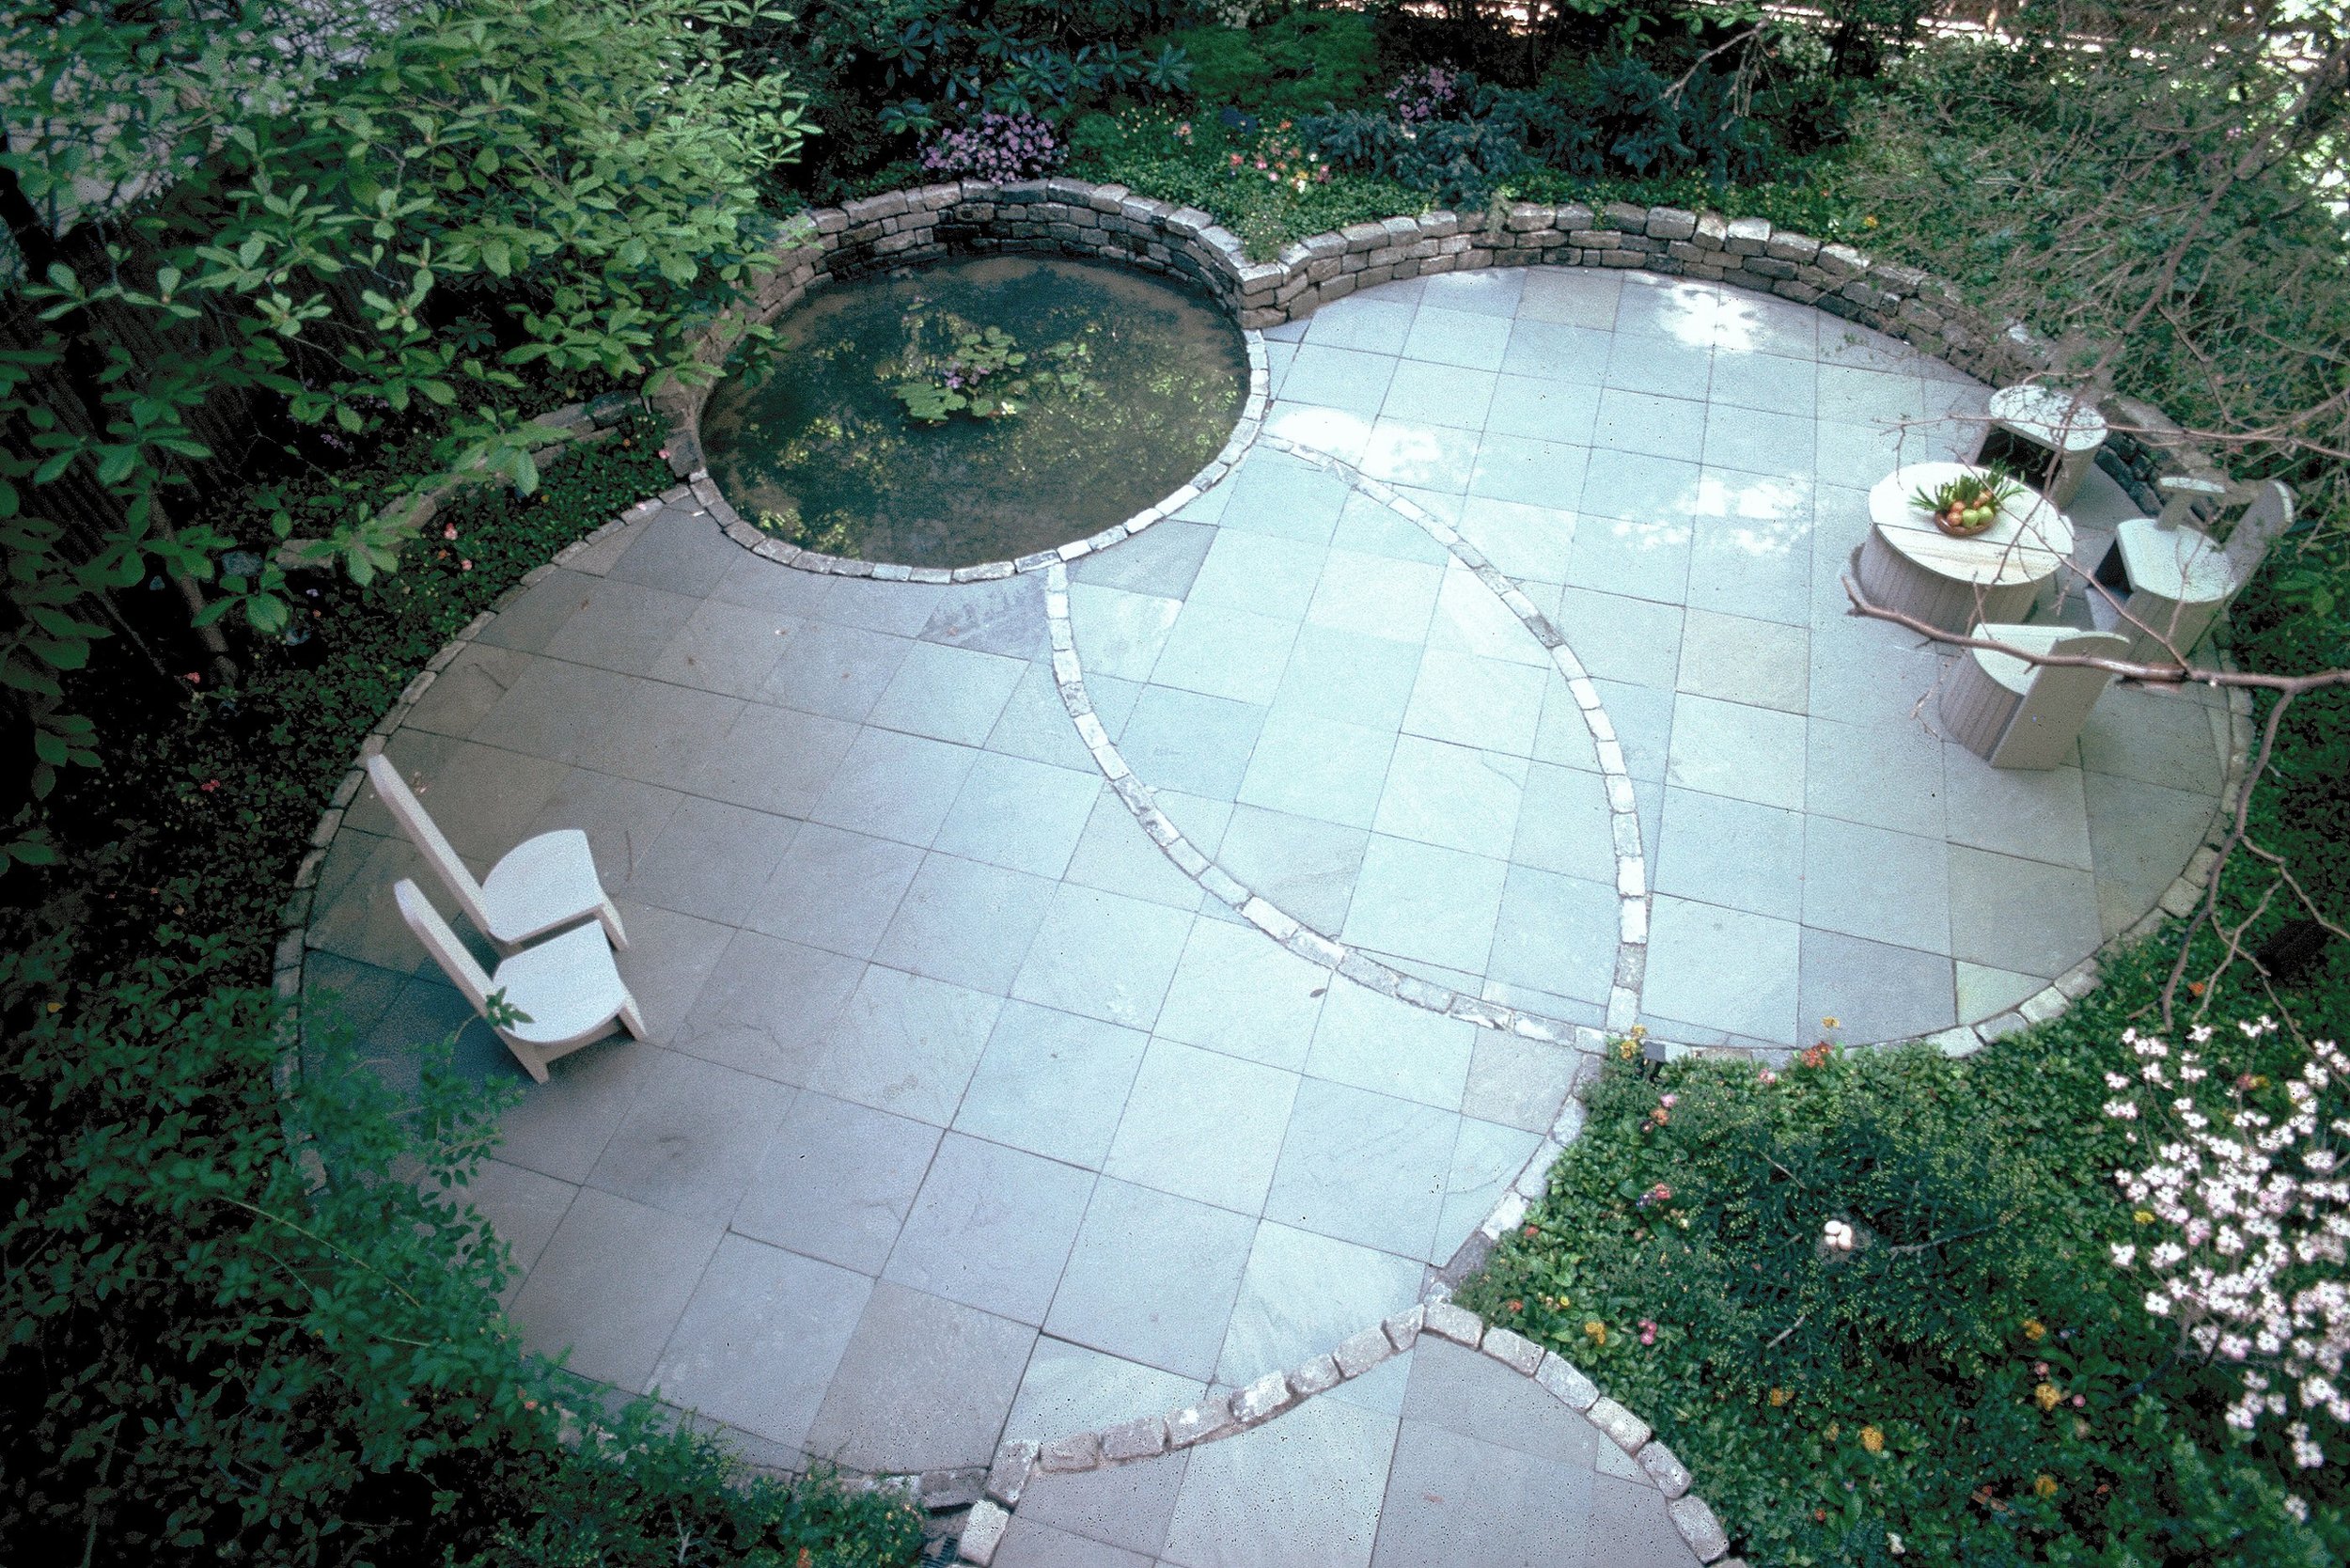 KB nyc townhouse luxury backyard garden design custom landscape architecture stonework seating installation maintenance.jpg